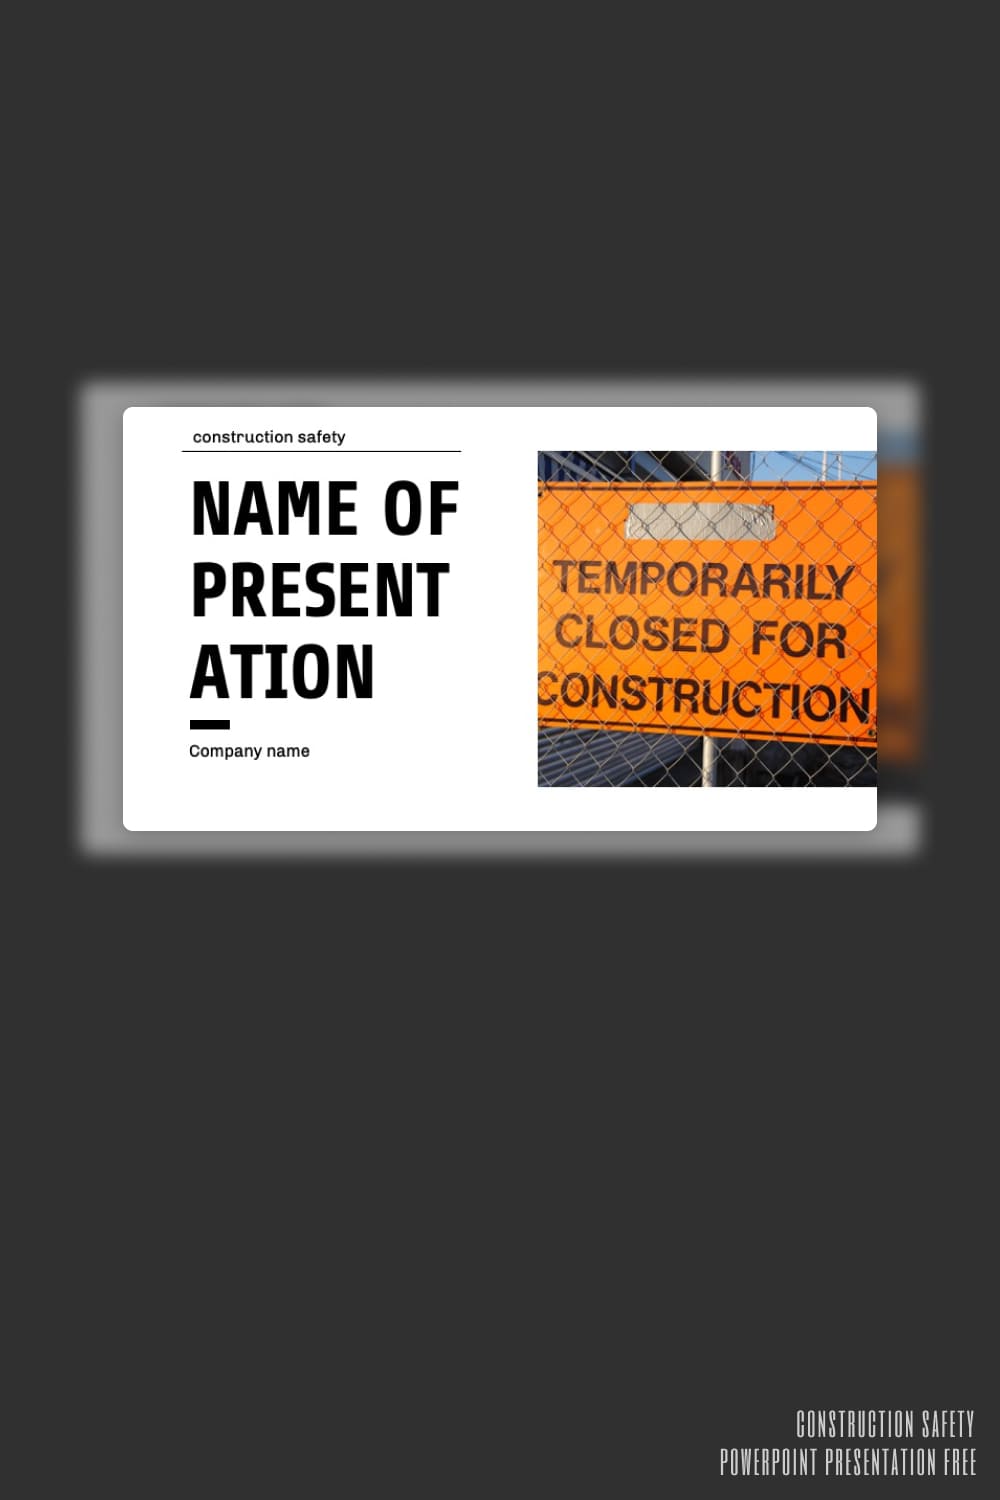 Construction Safety Powerpoint Presentation Free Pinterest.